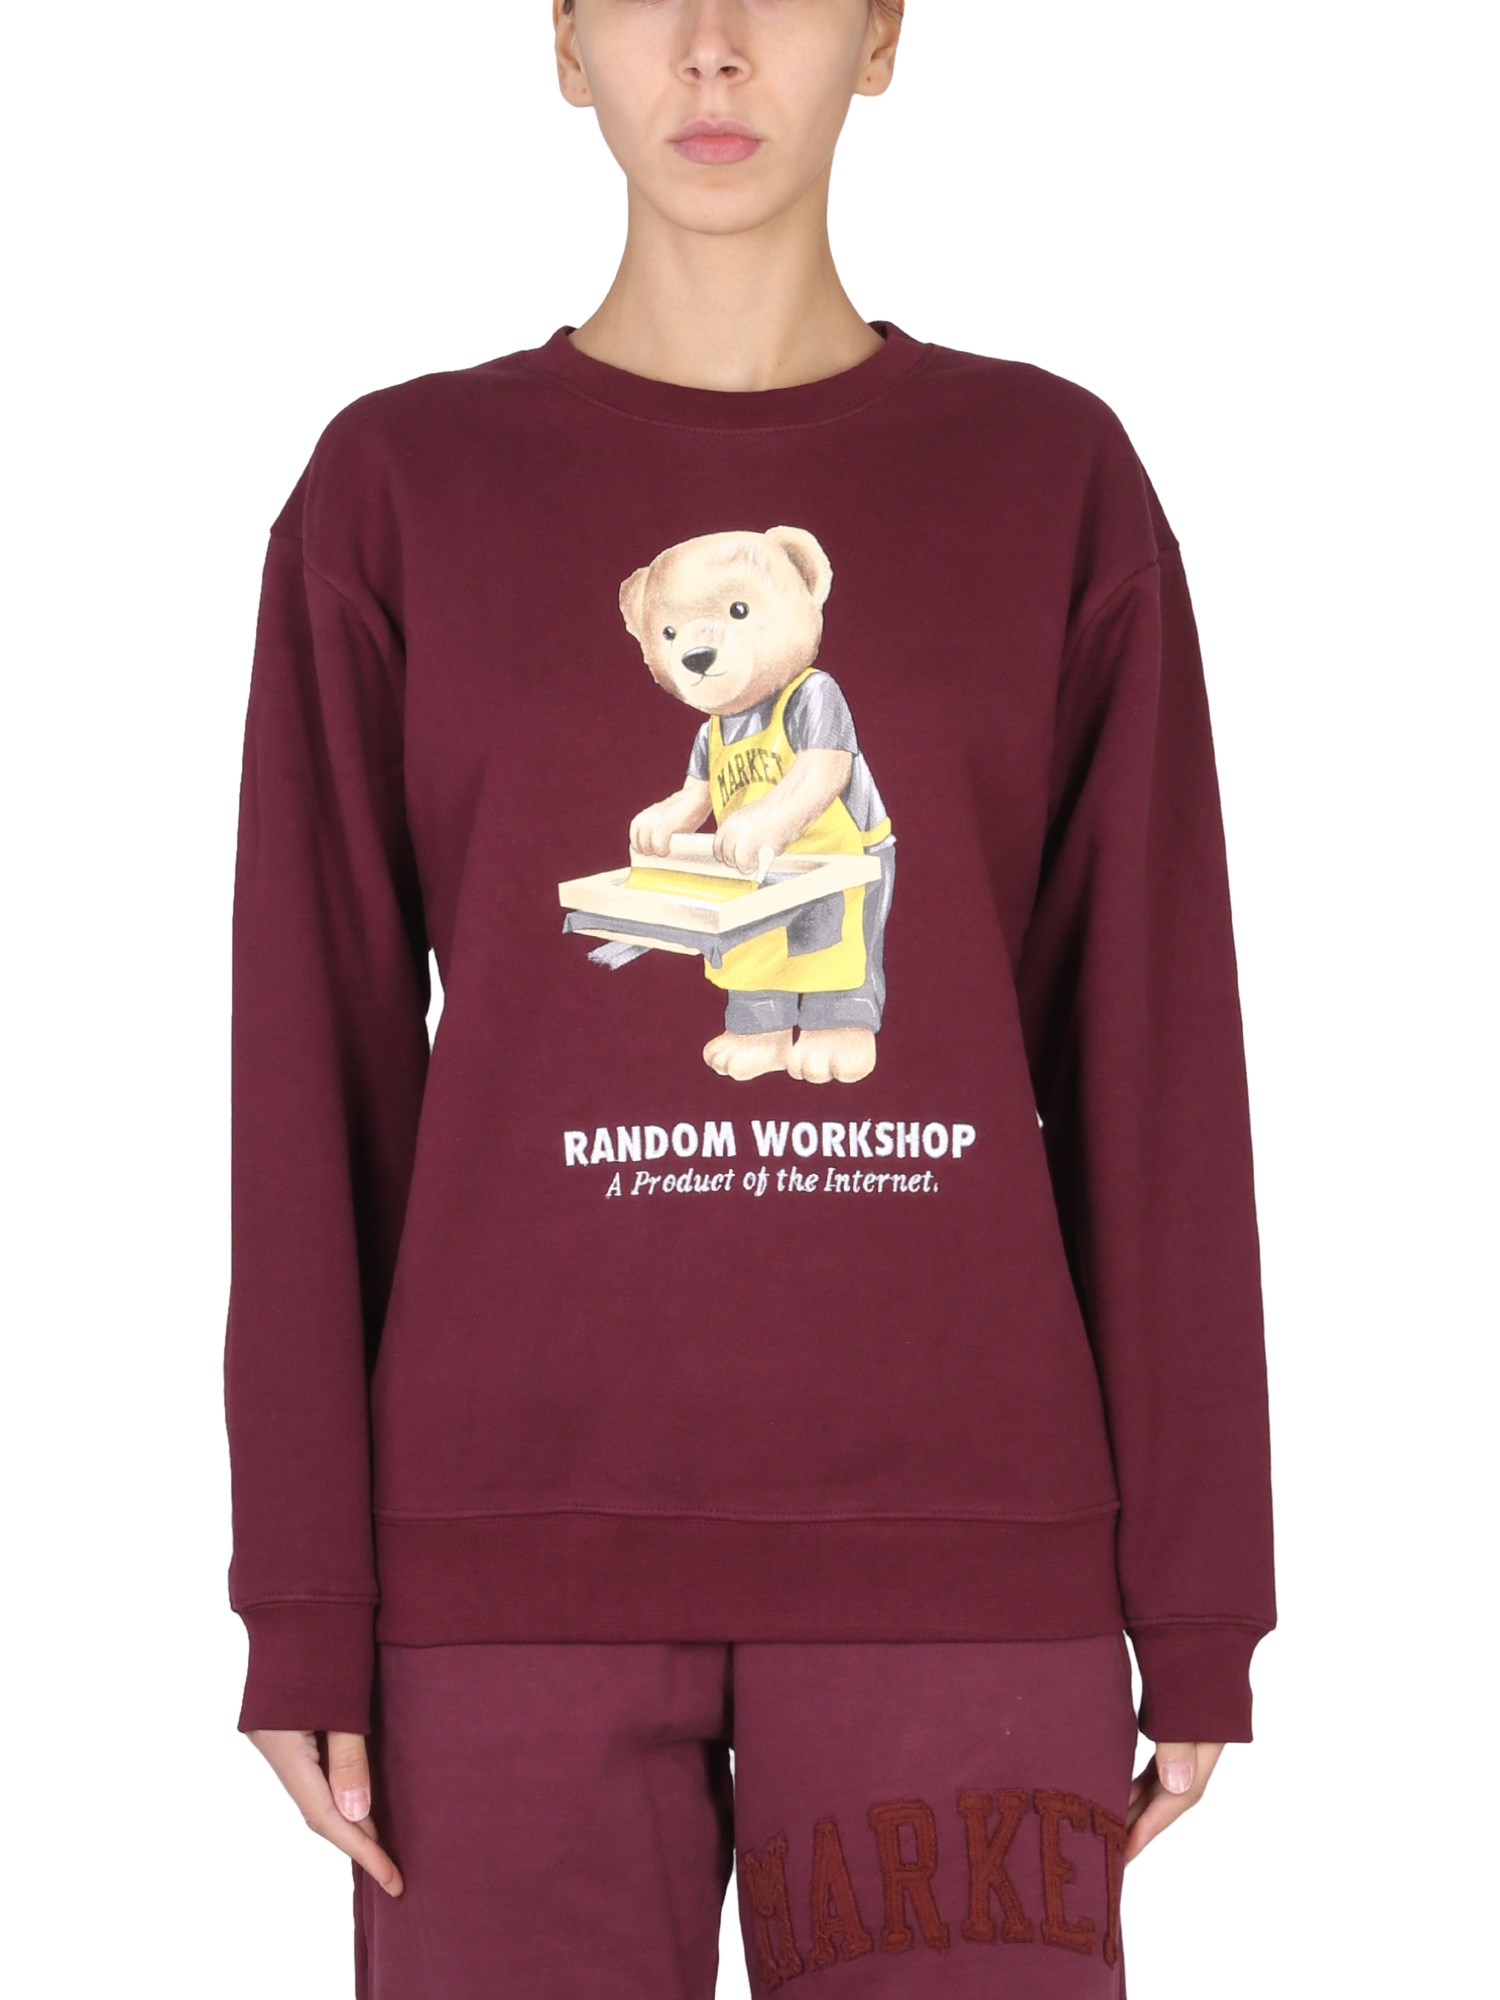 market random workshop bear sweatshirt